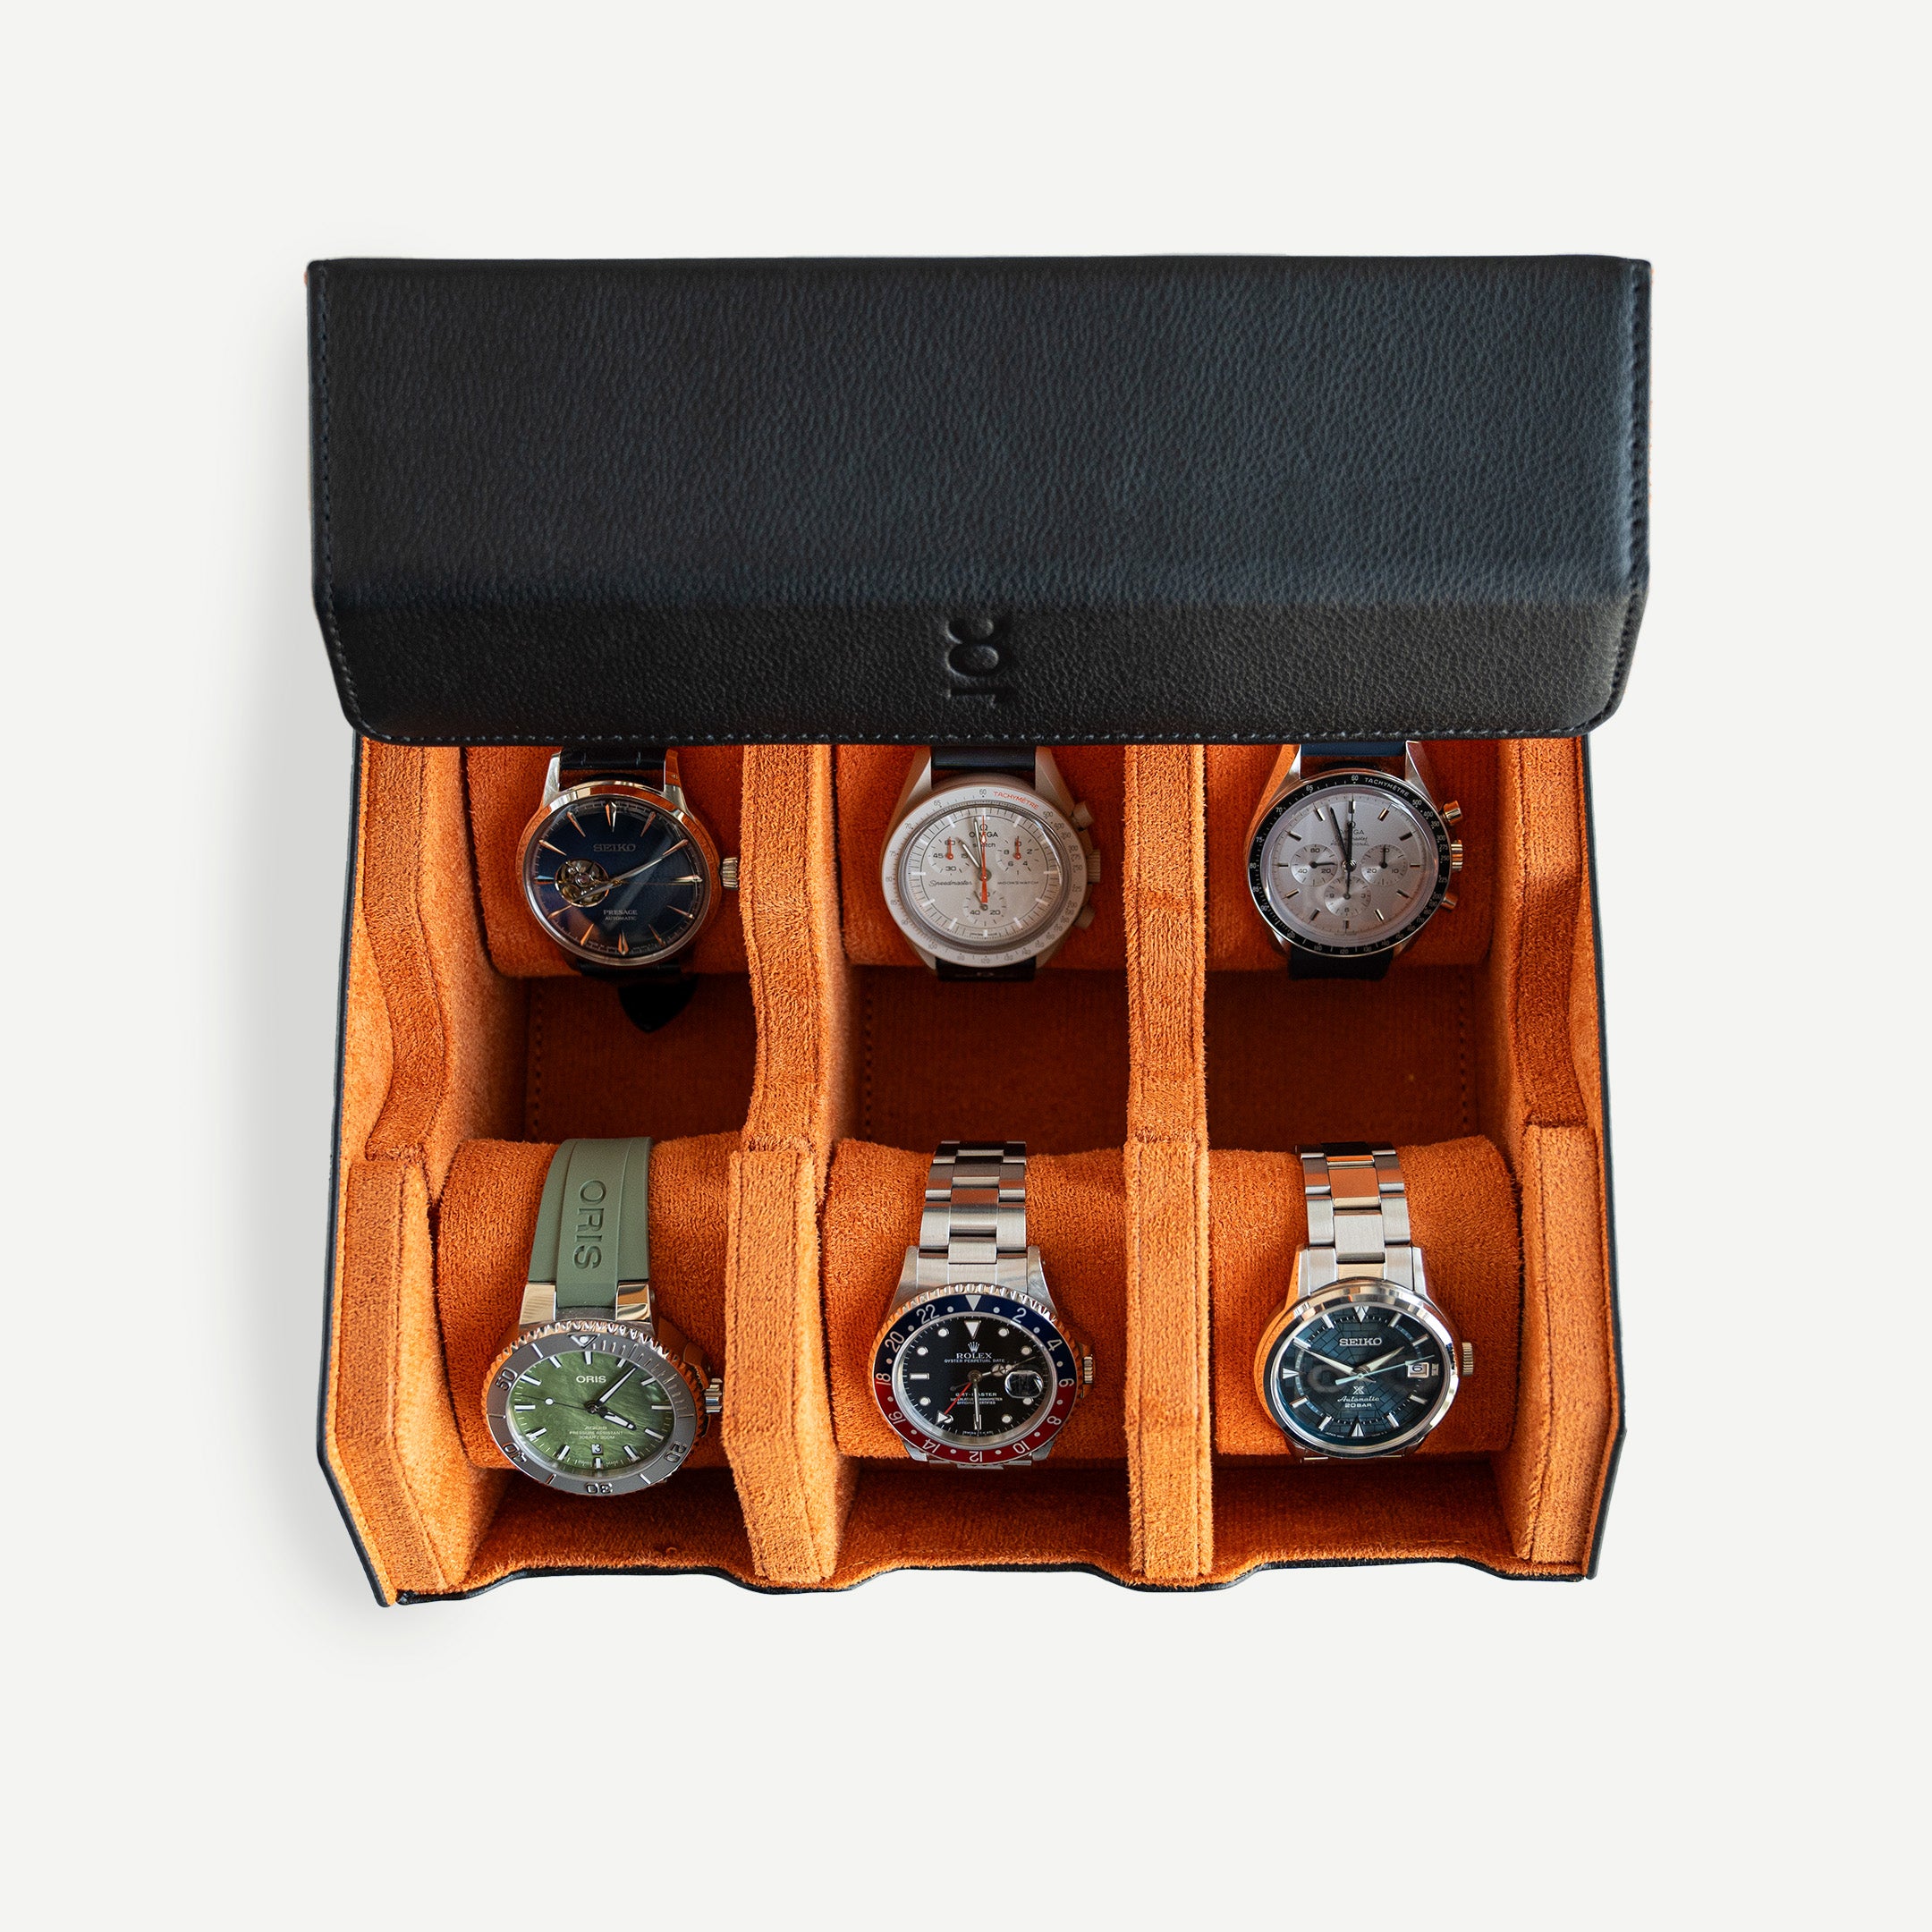 Hexagon Watch Box - Black Orange - €179 - Free shipping